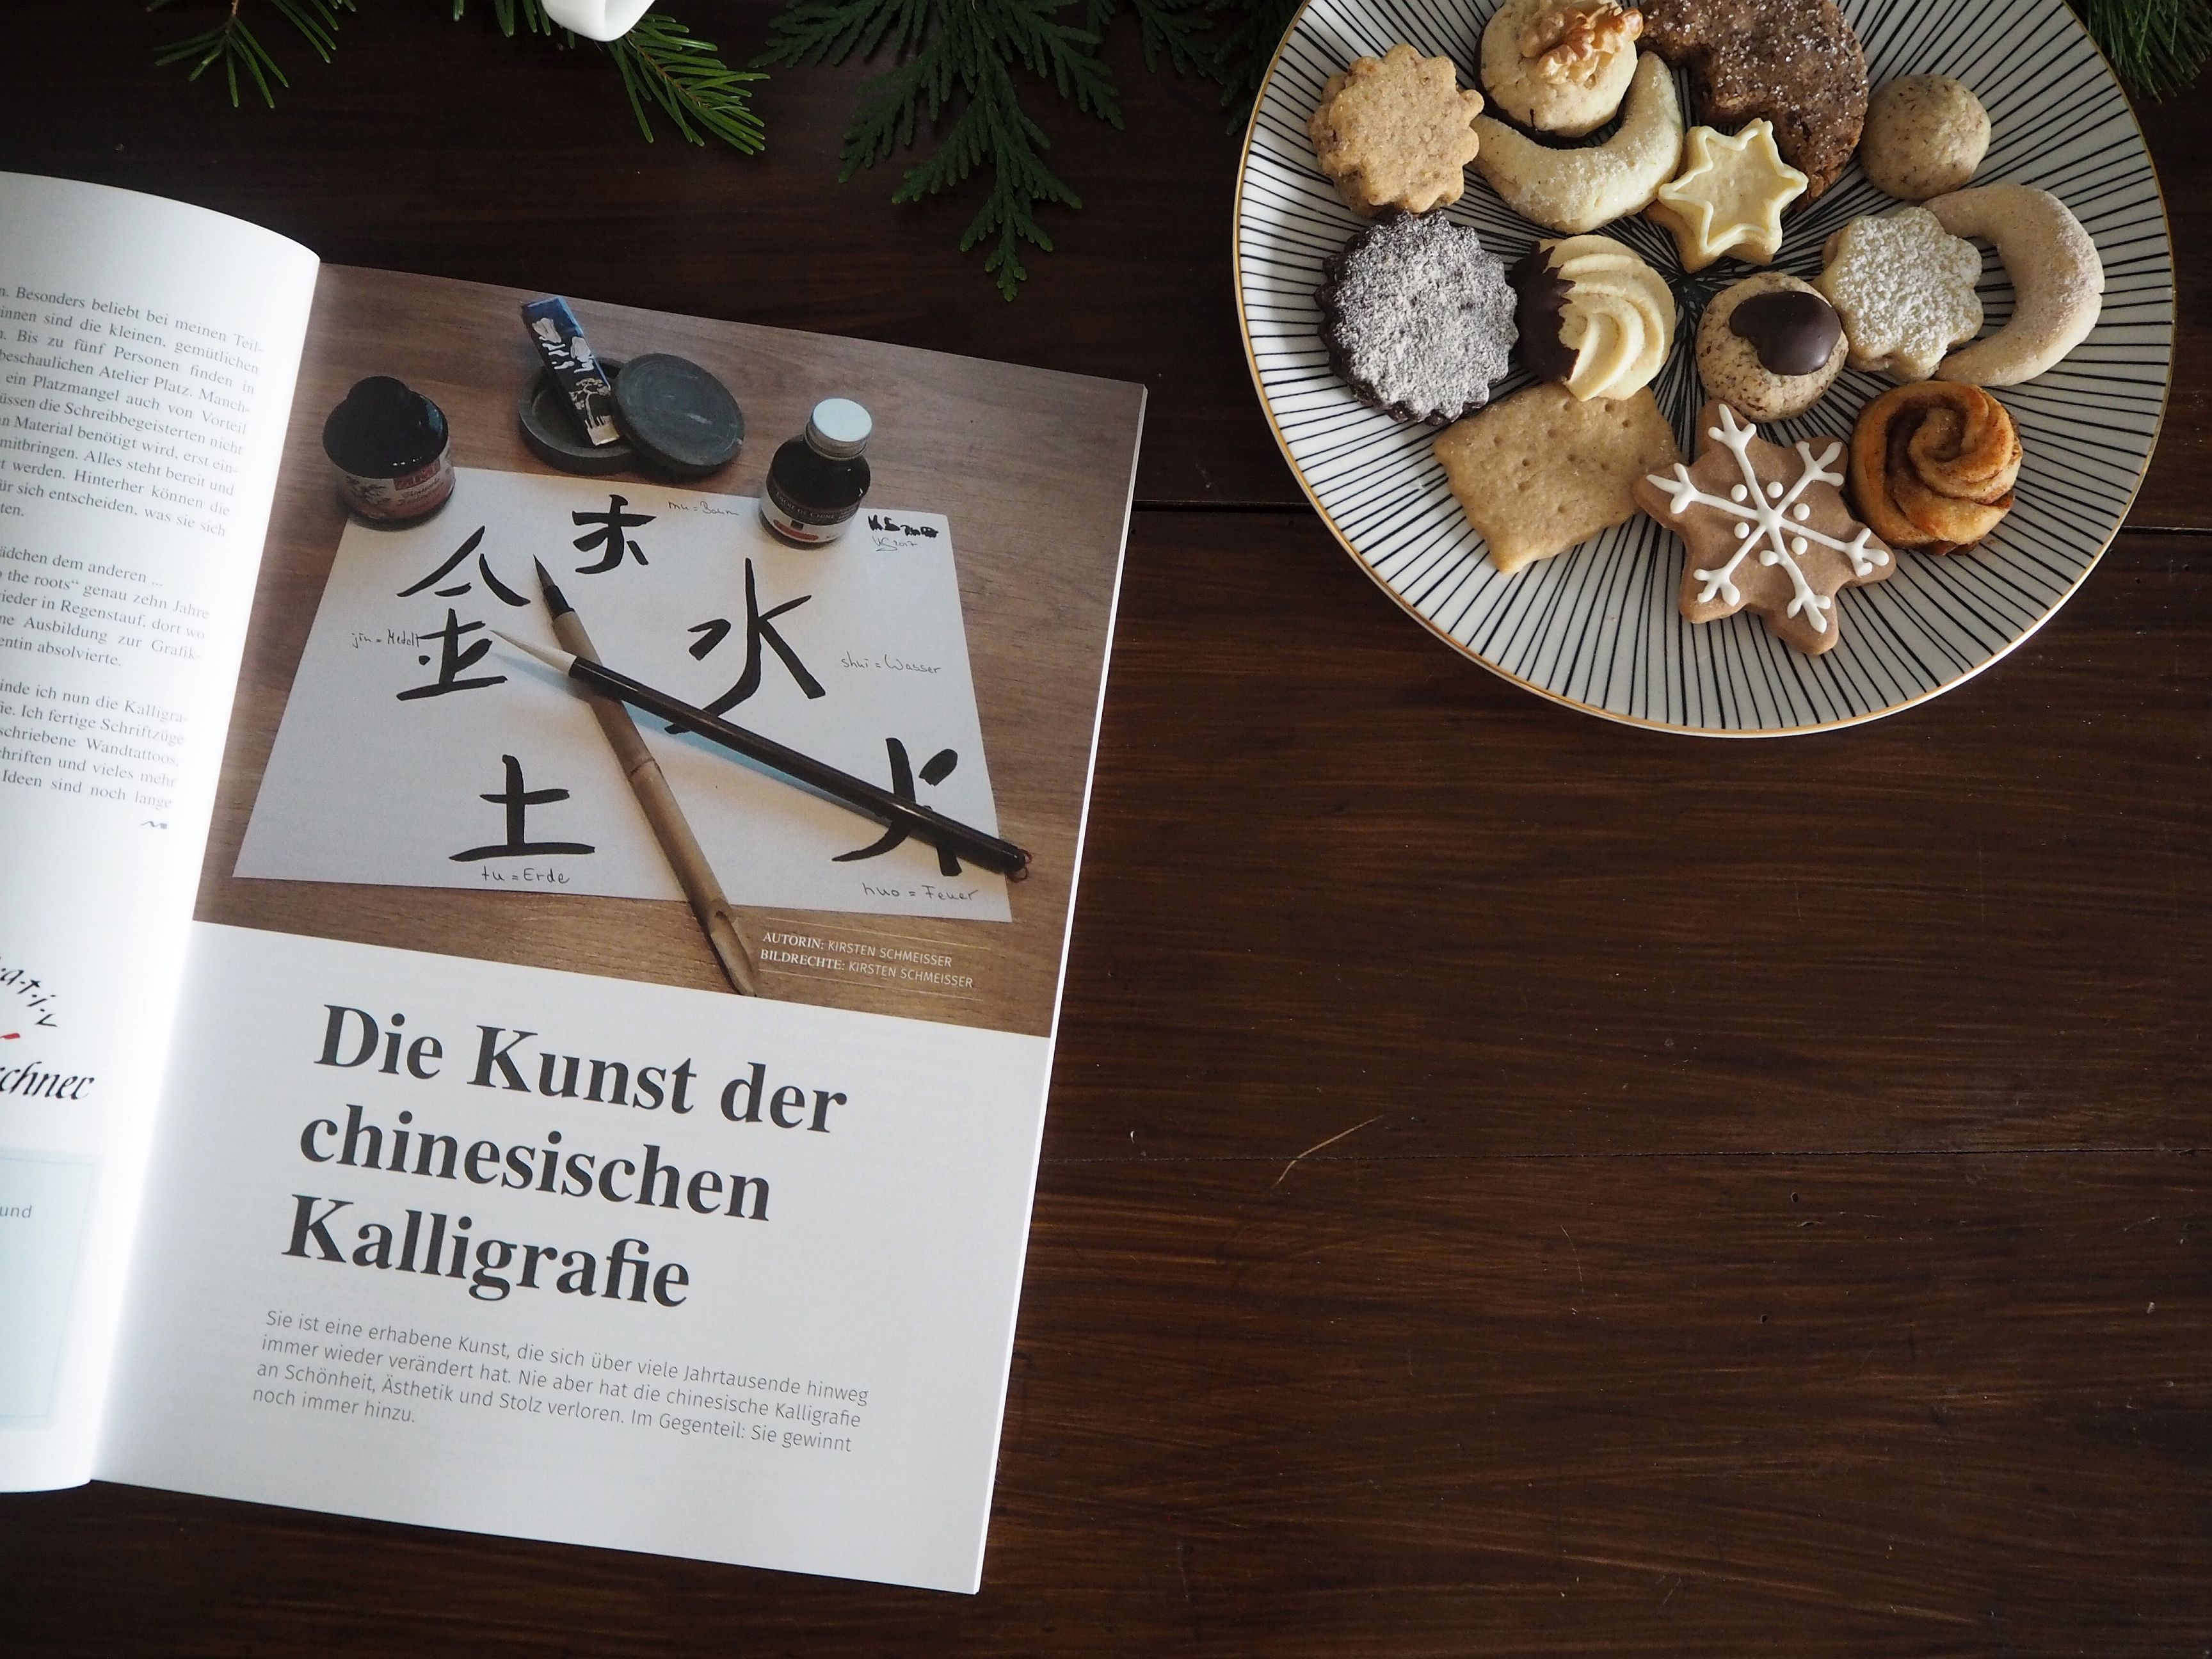 Sonntagslektüre im Dezember # Kalligrafie aktuell | Skön och kreativ